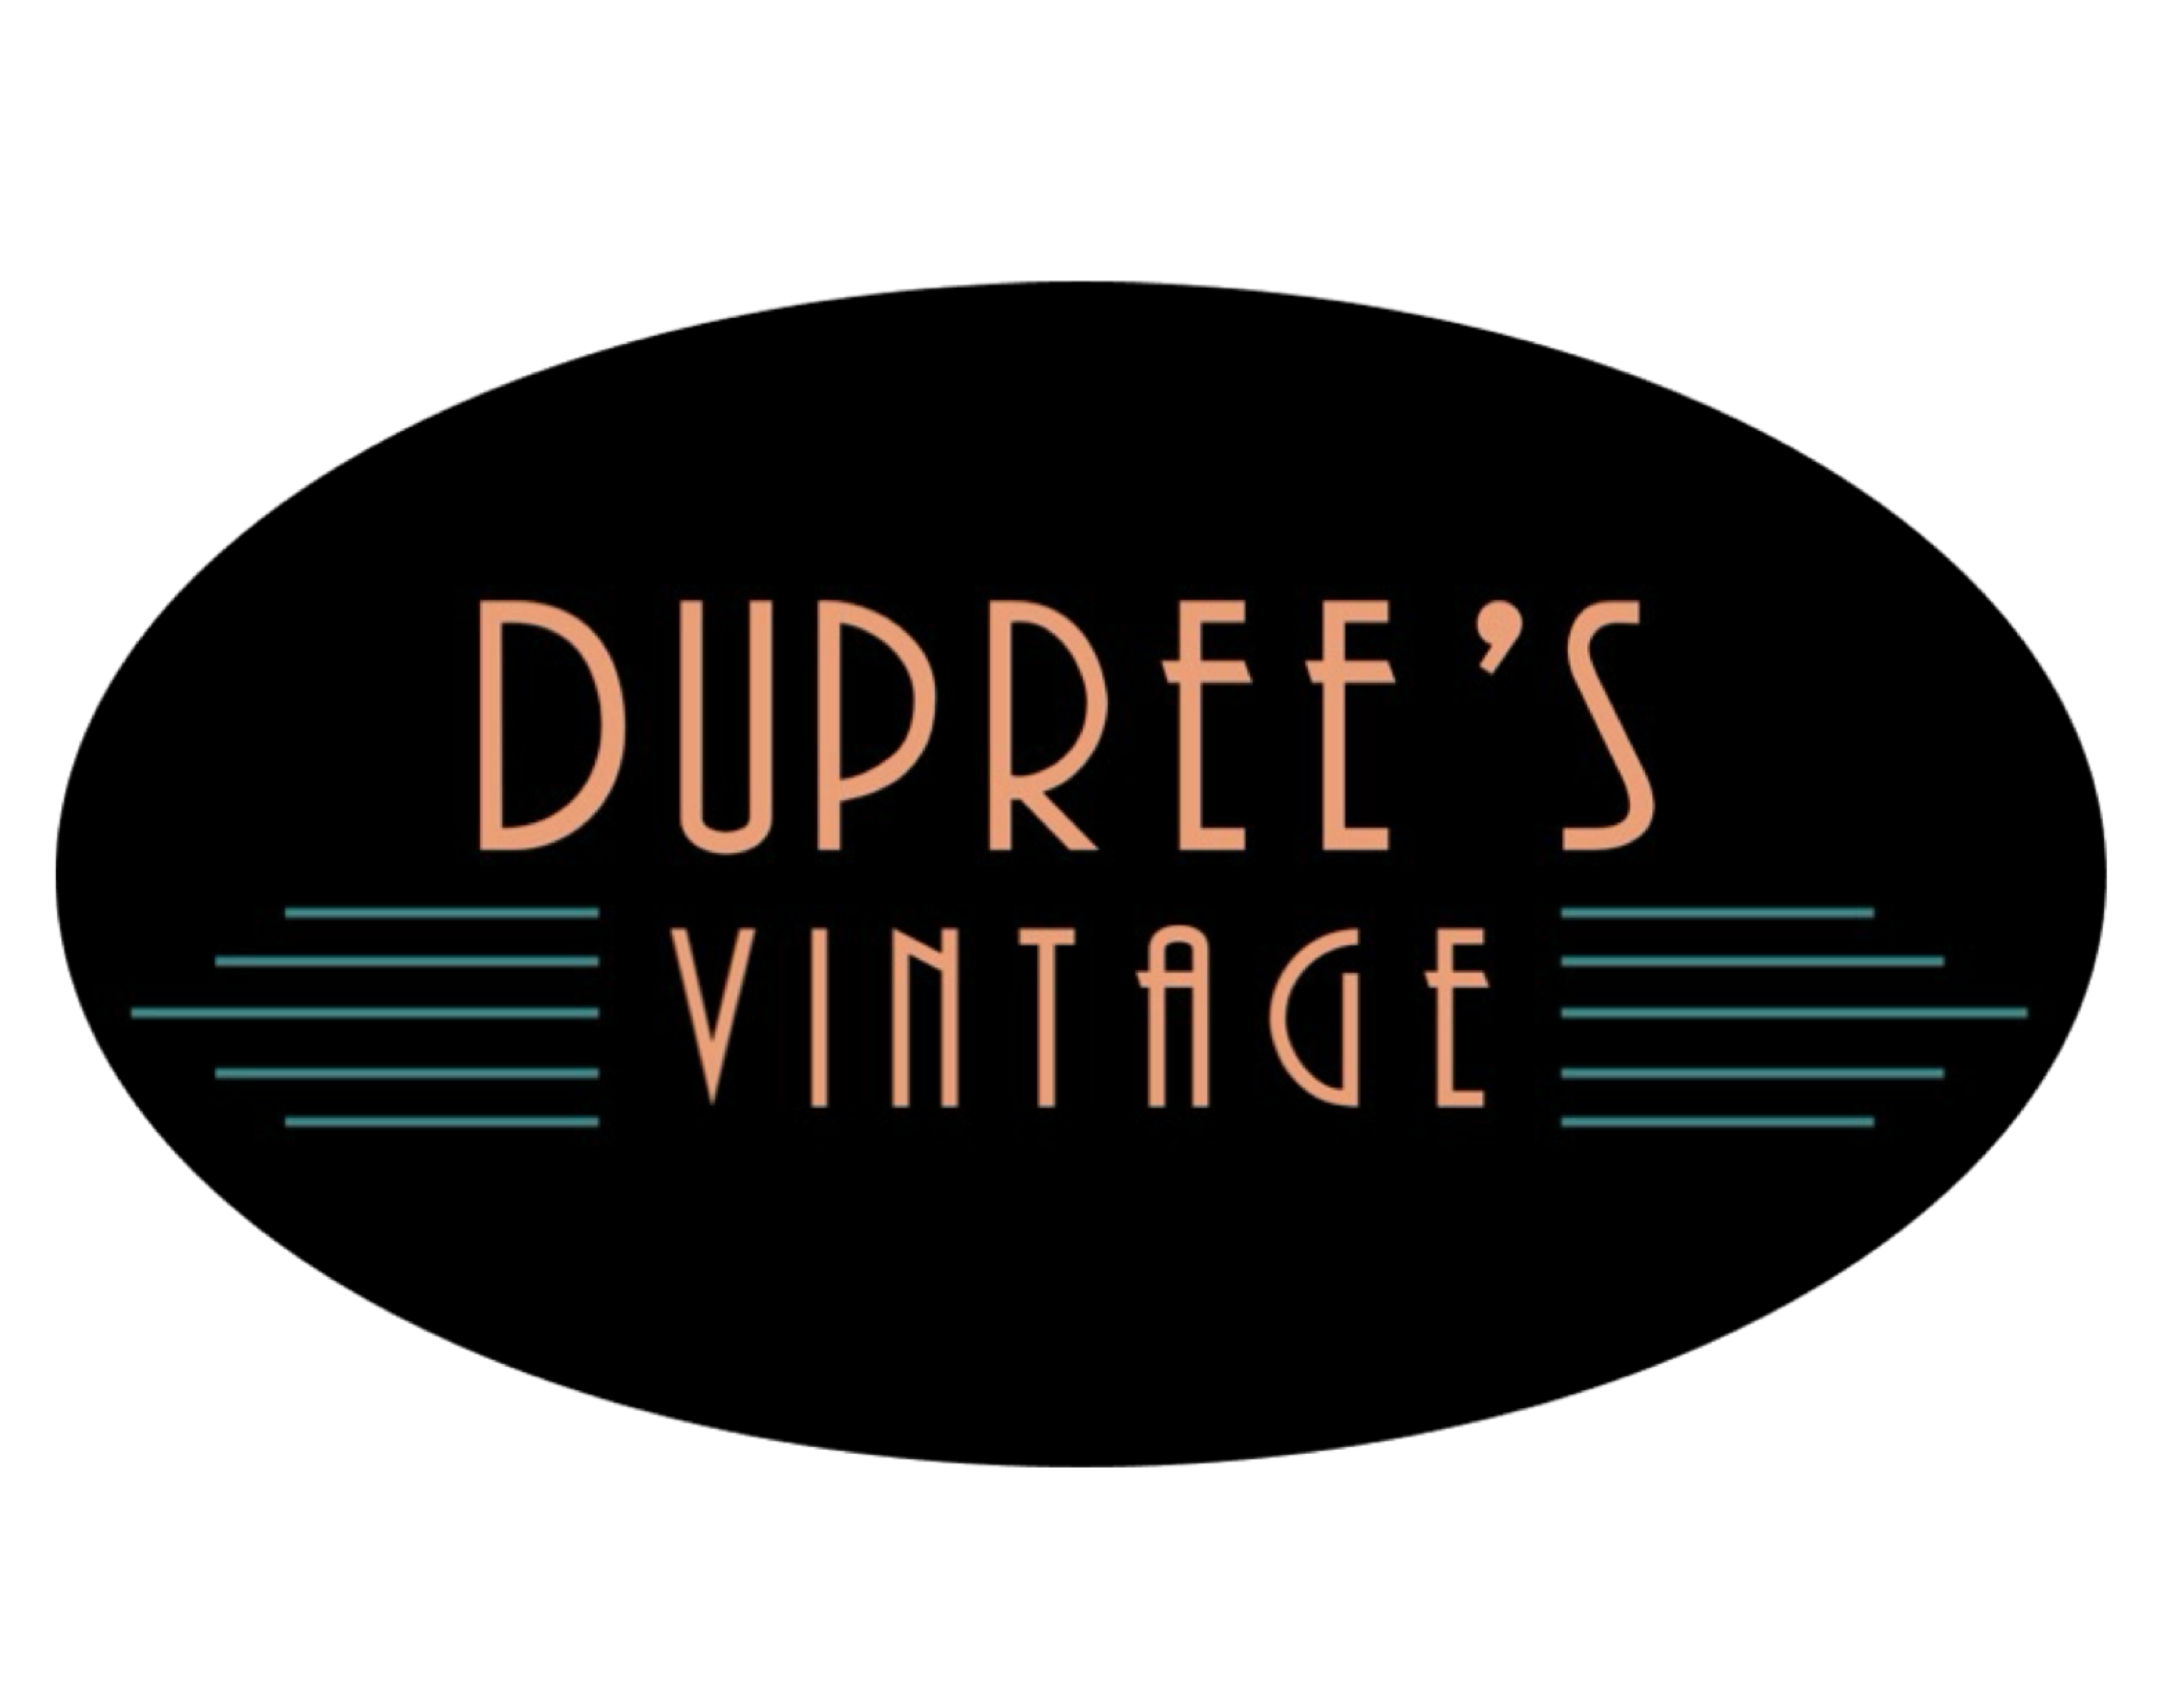 Dupree's Vintage